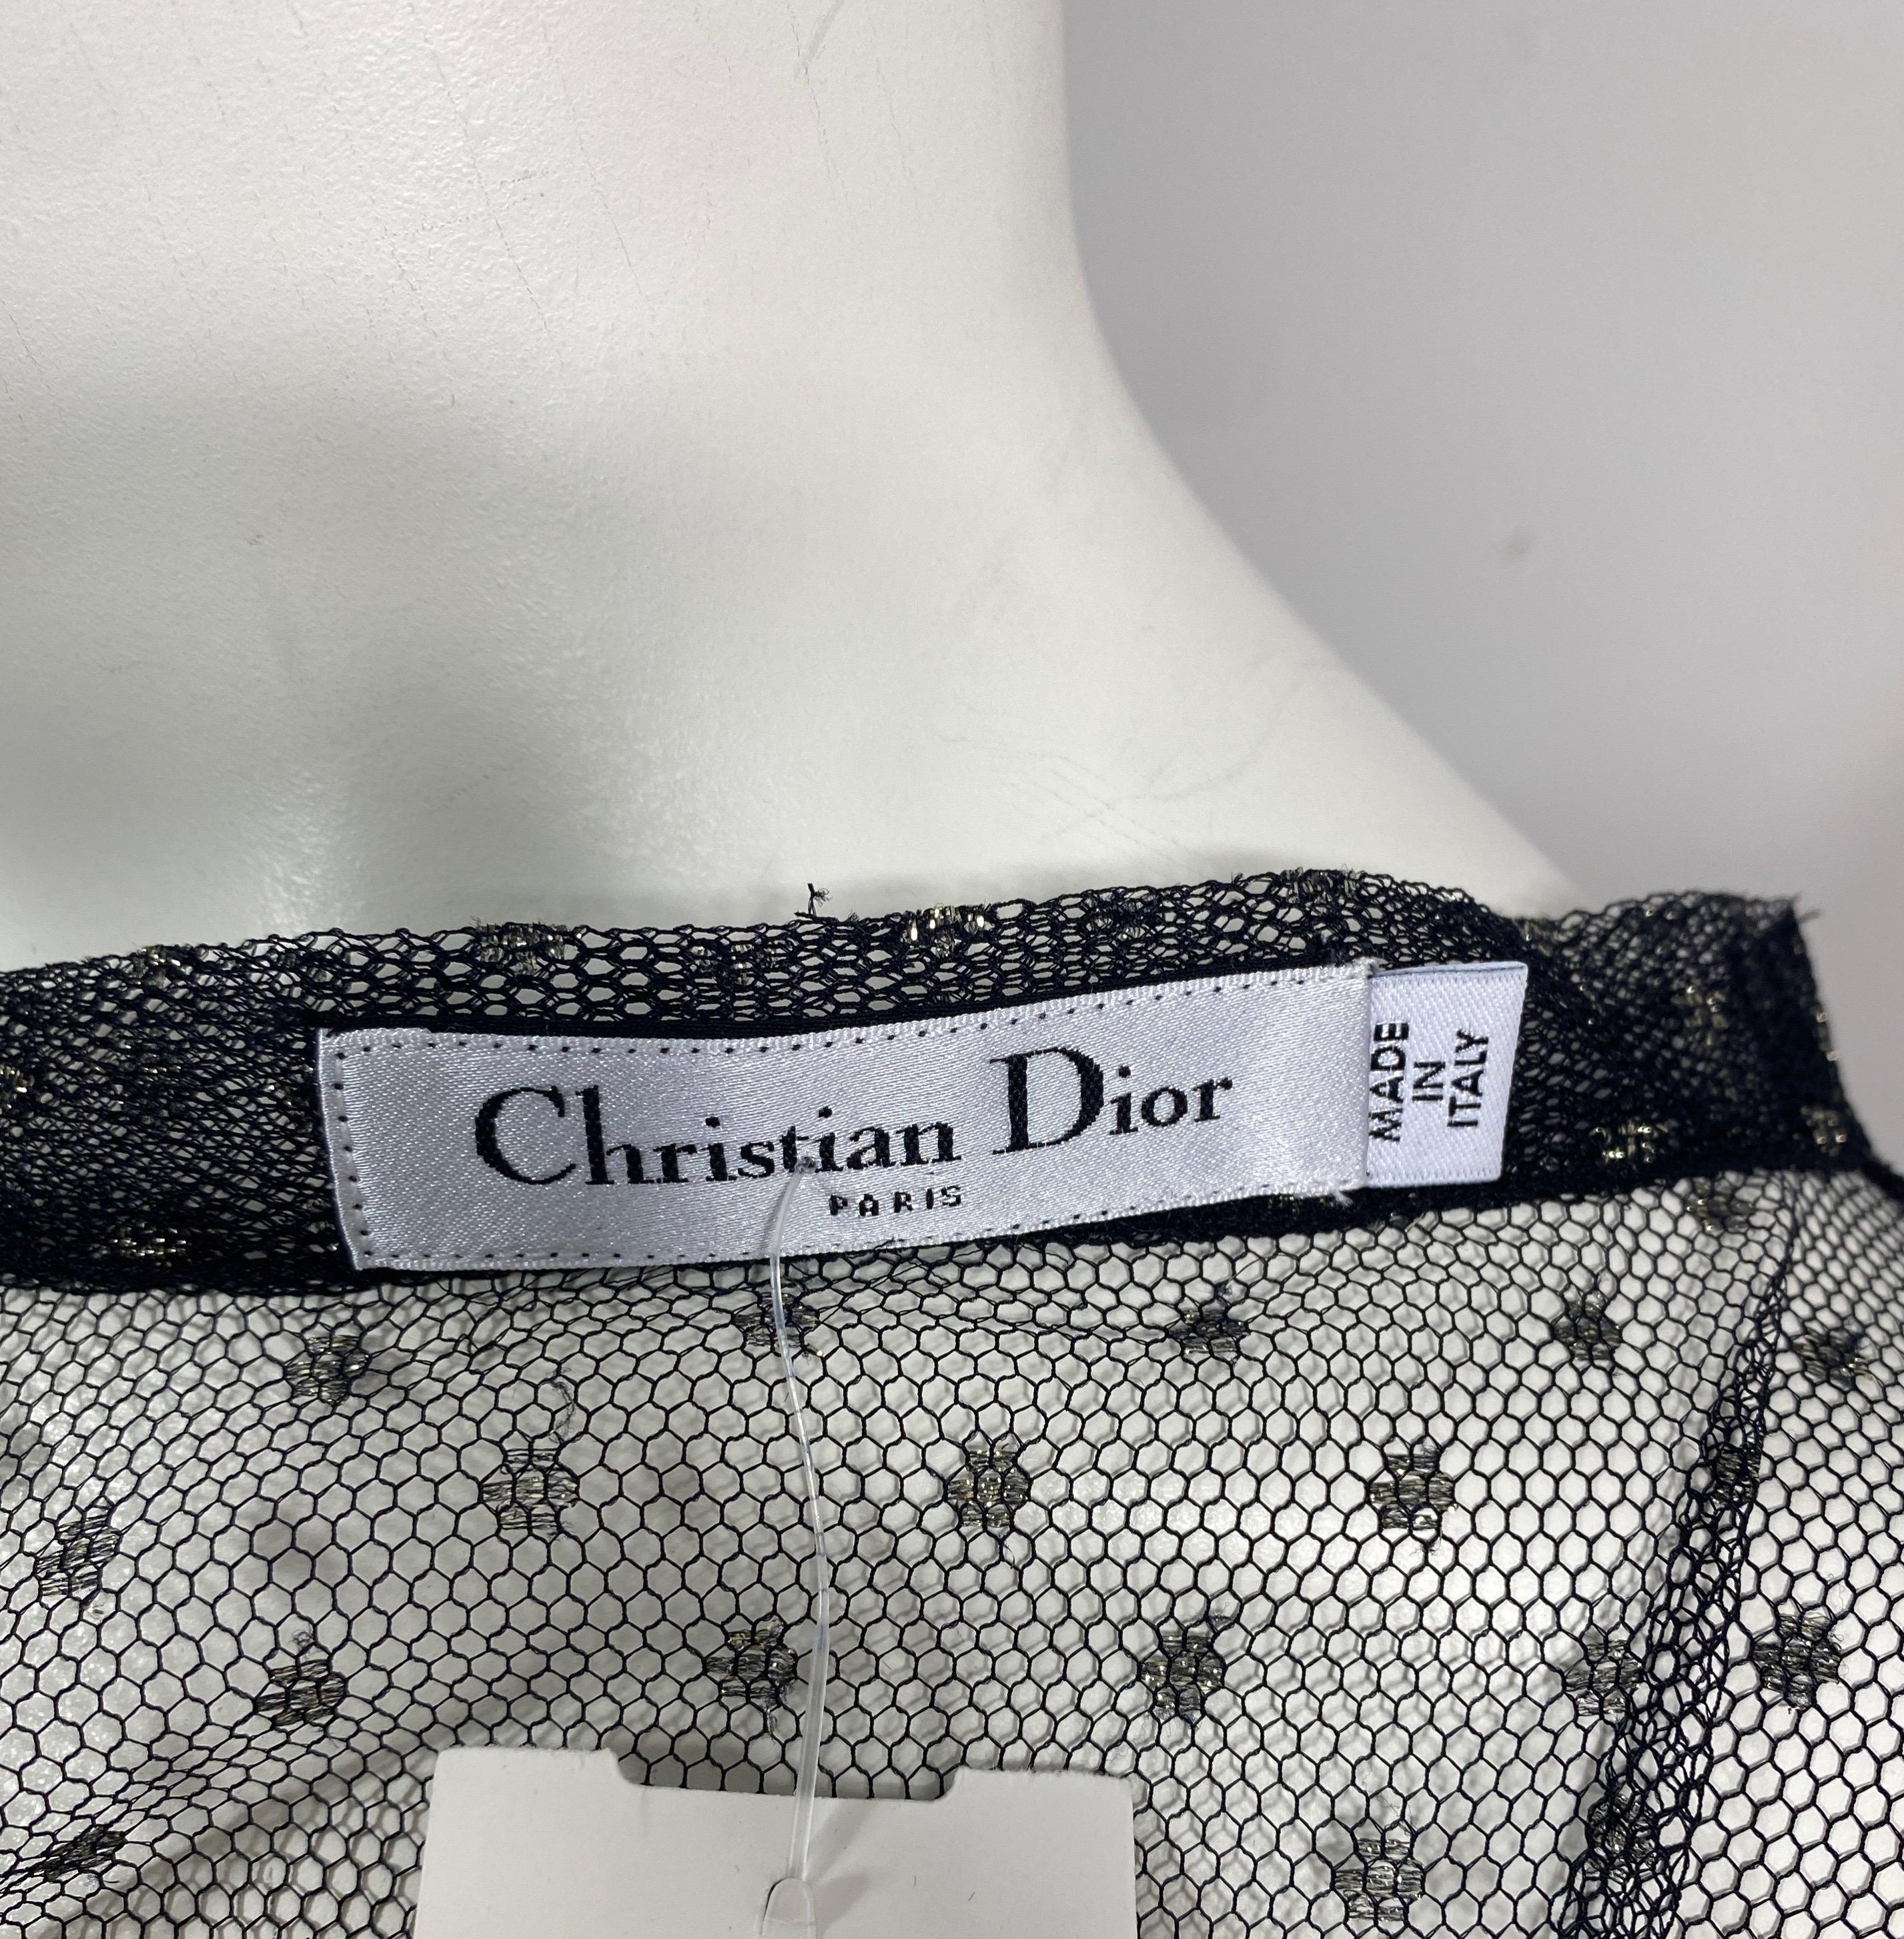 Christian Dior Mini Polka Dot Sheer Mesh Top noir et or - Taille petite en vente 12